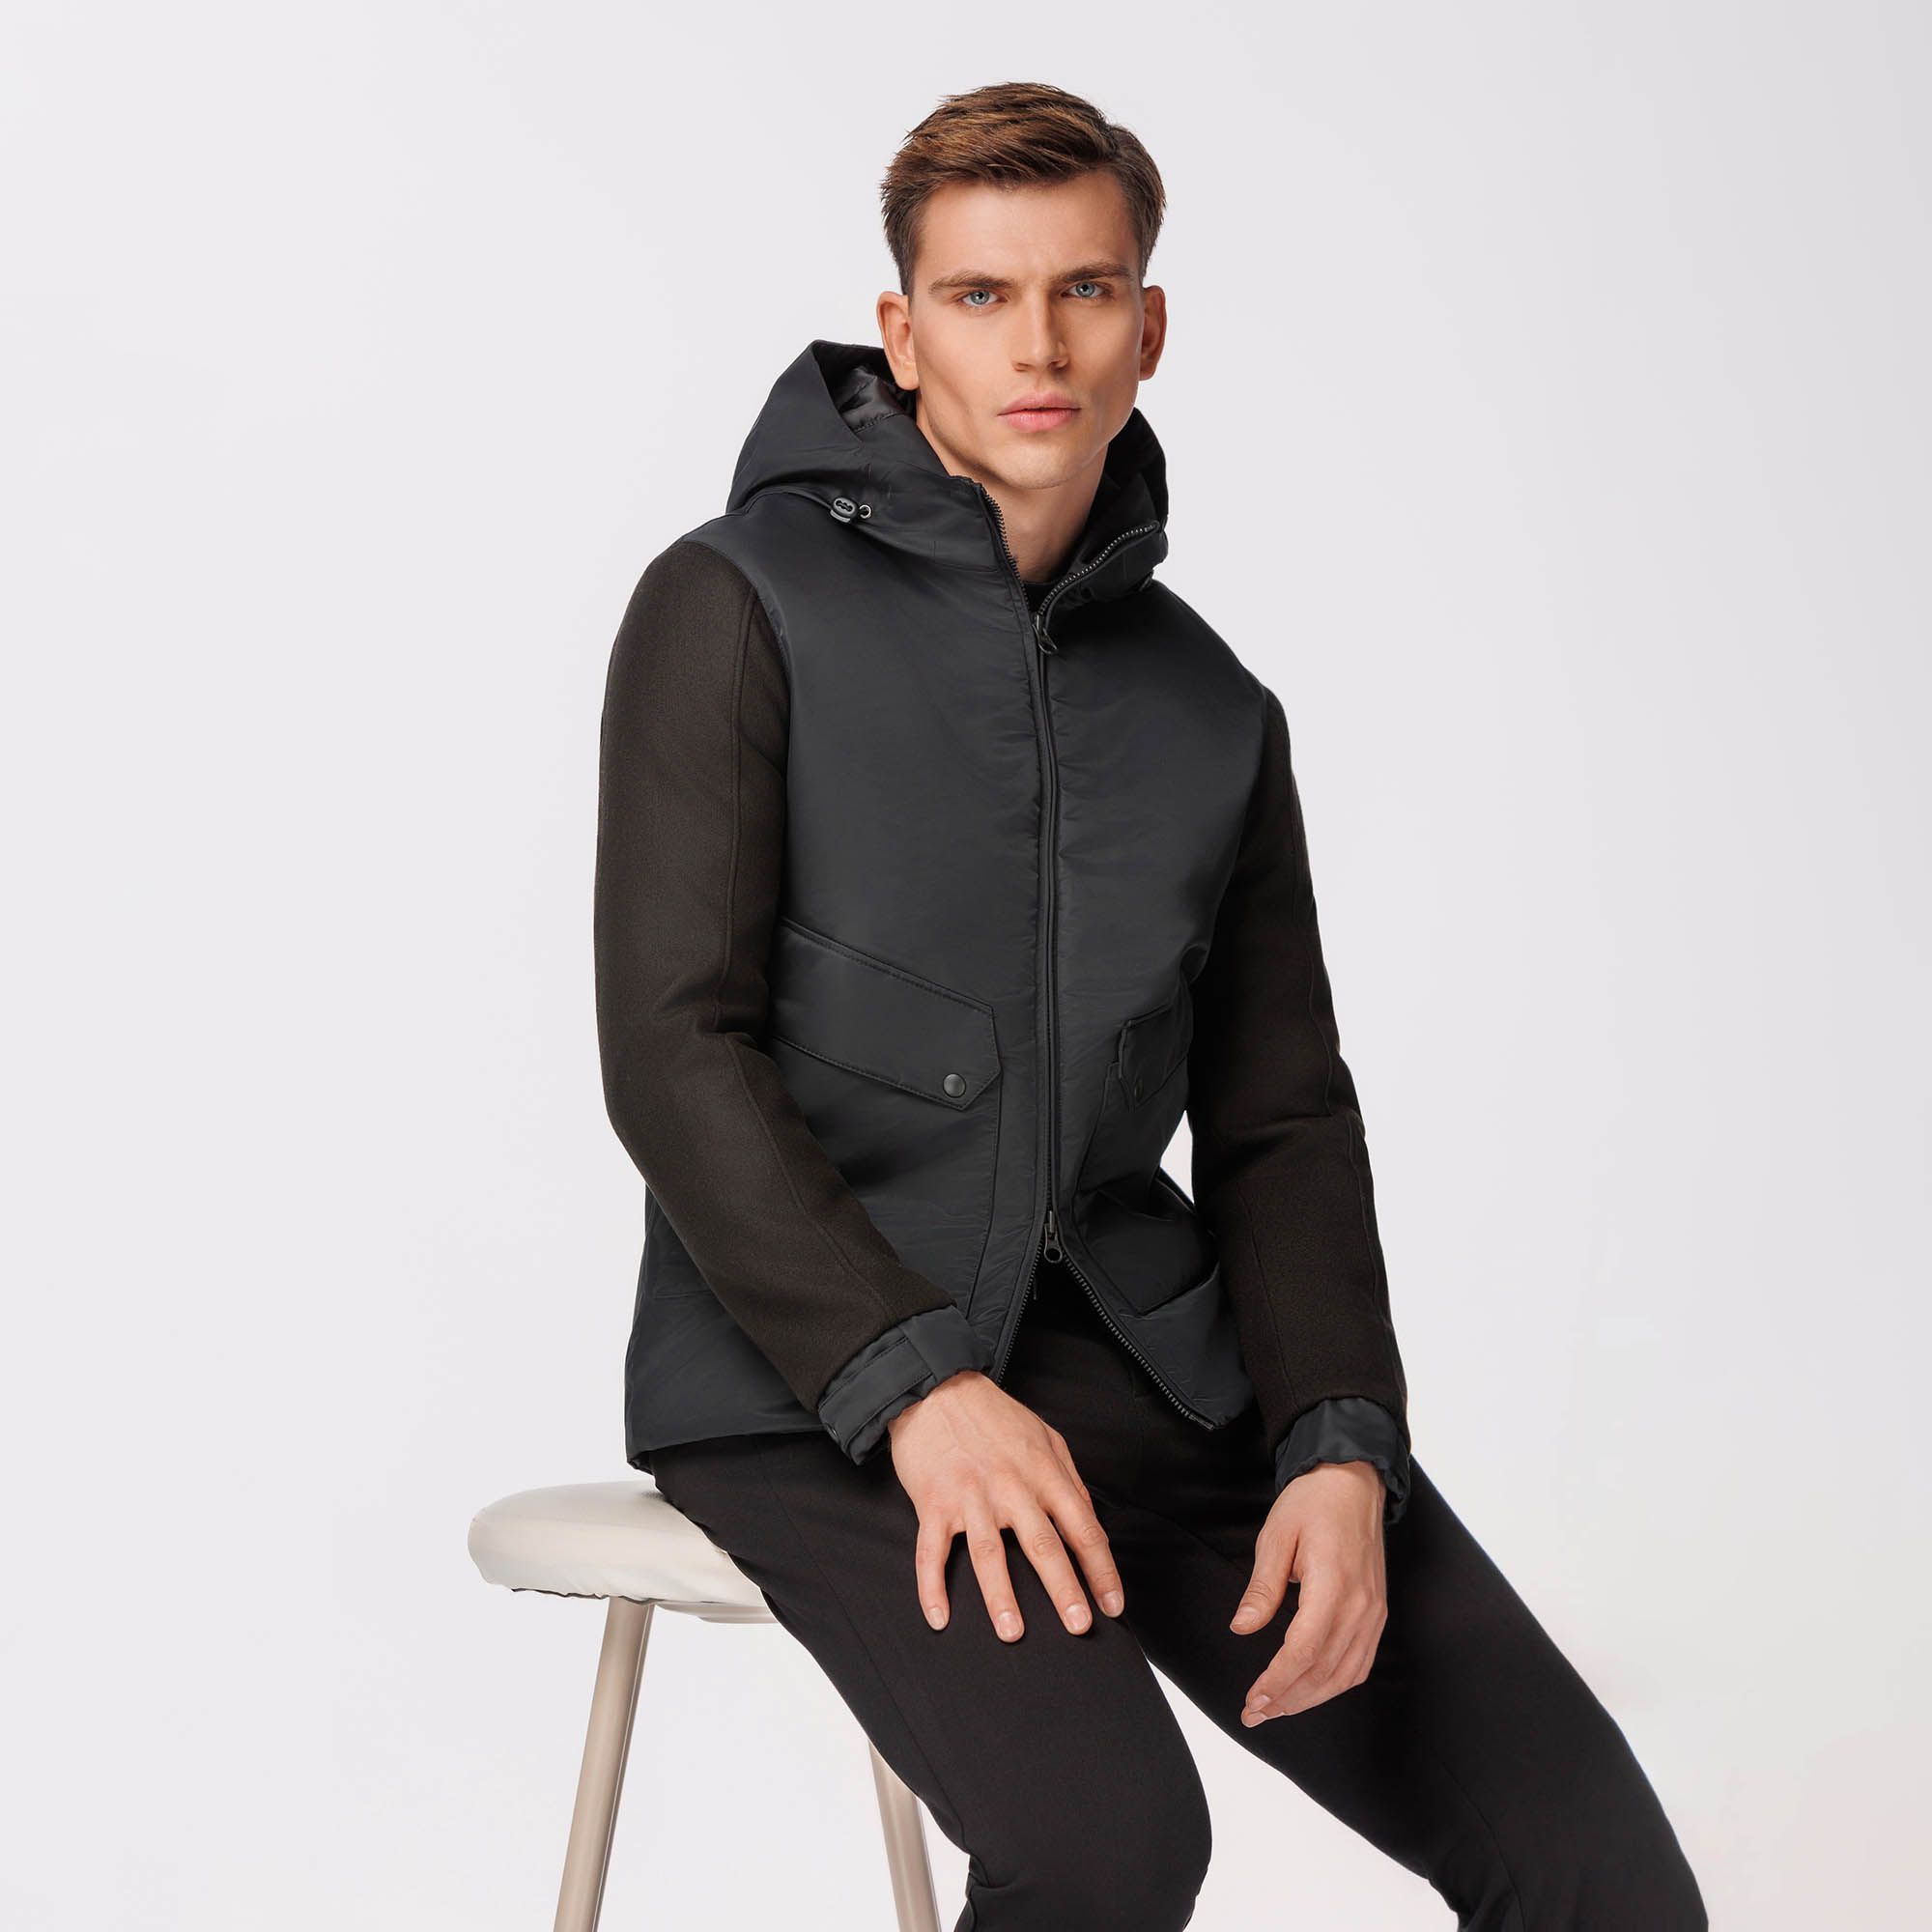 Men's Black hooded jacket